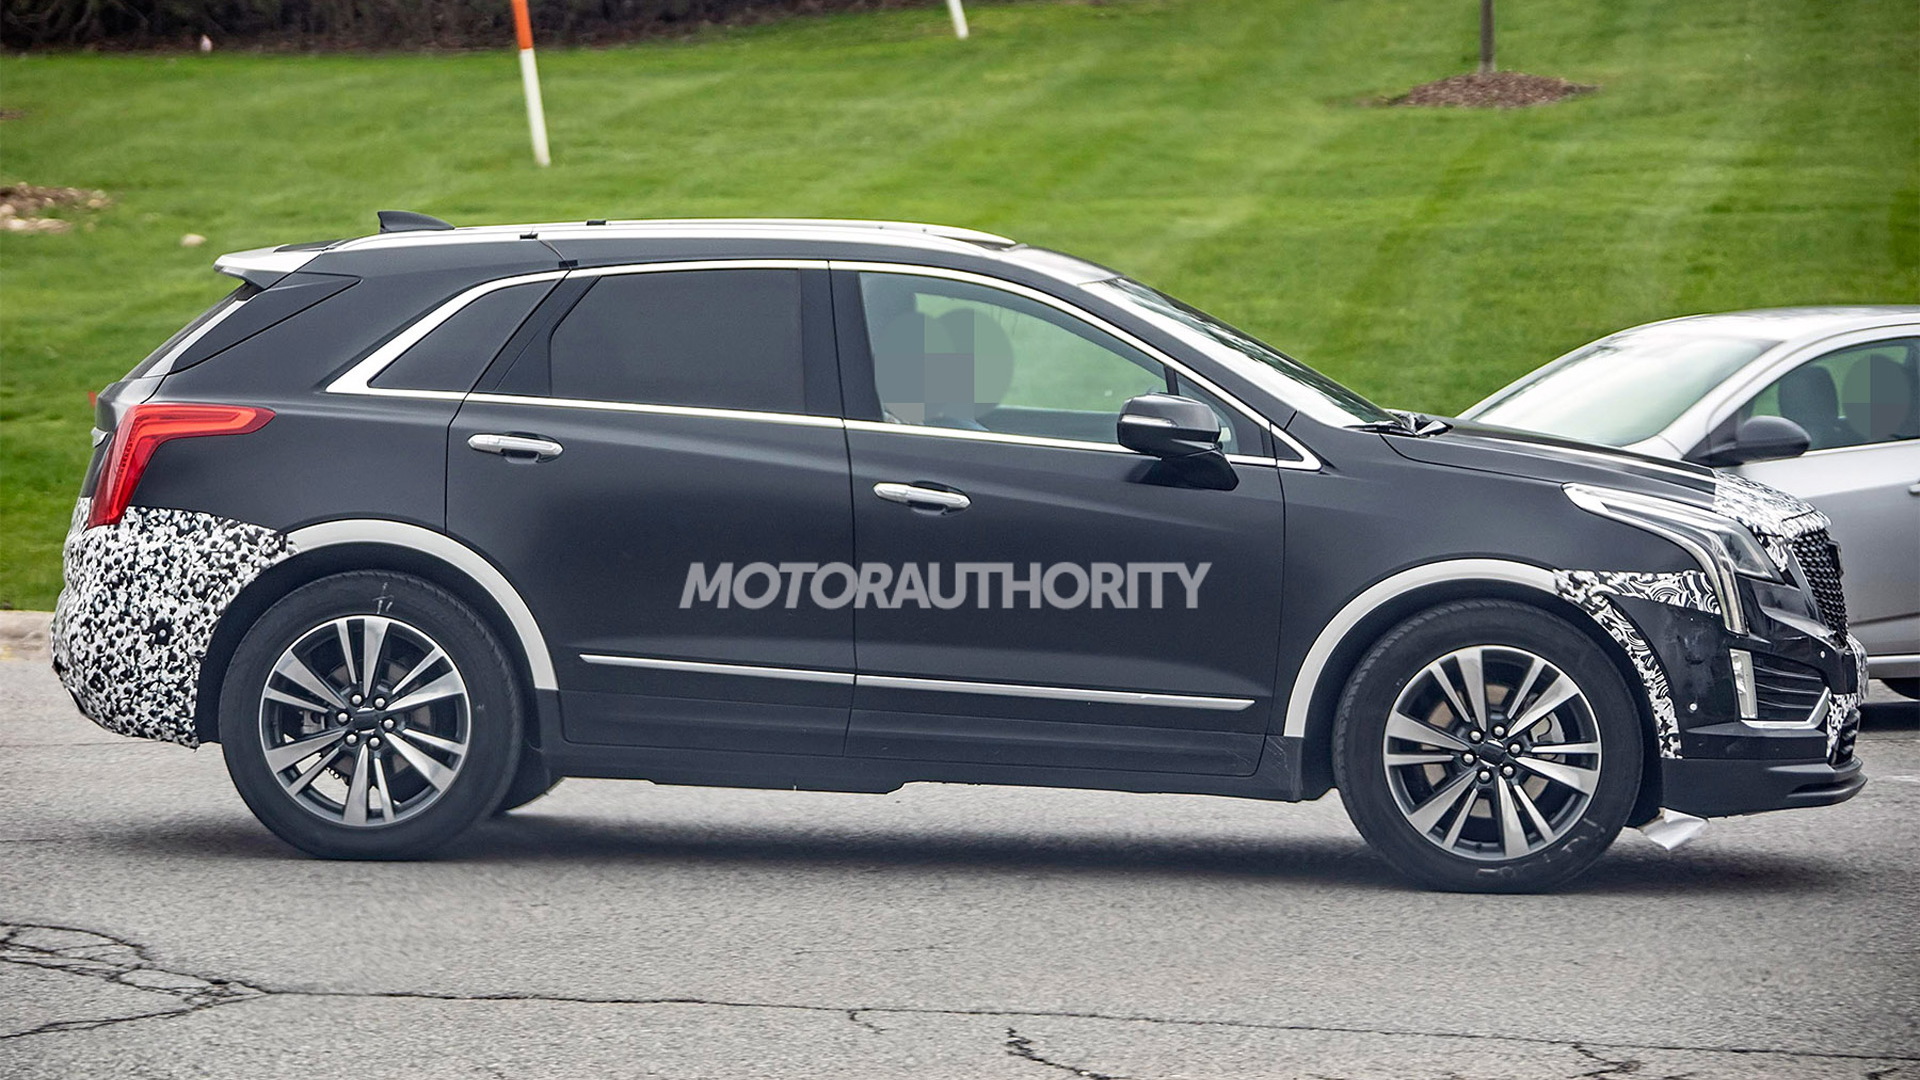 2020 Cadillac XT5 facelift spy shots - Image via S. Baldauf/SB-Medien